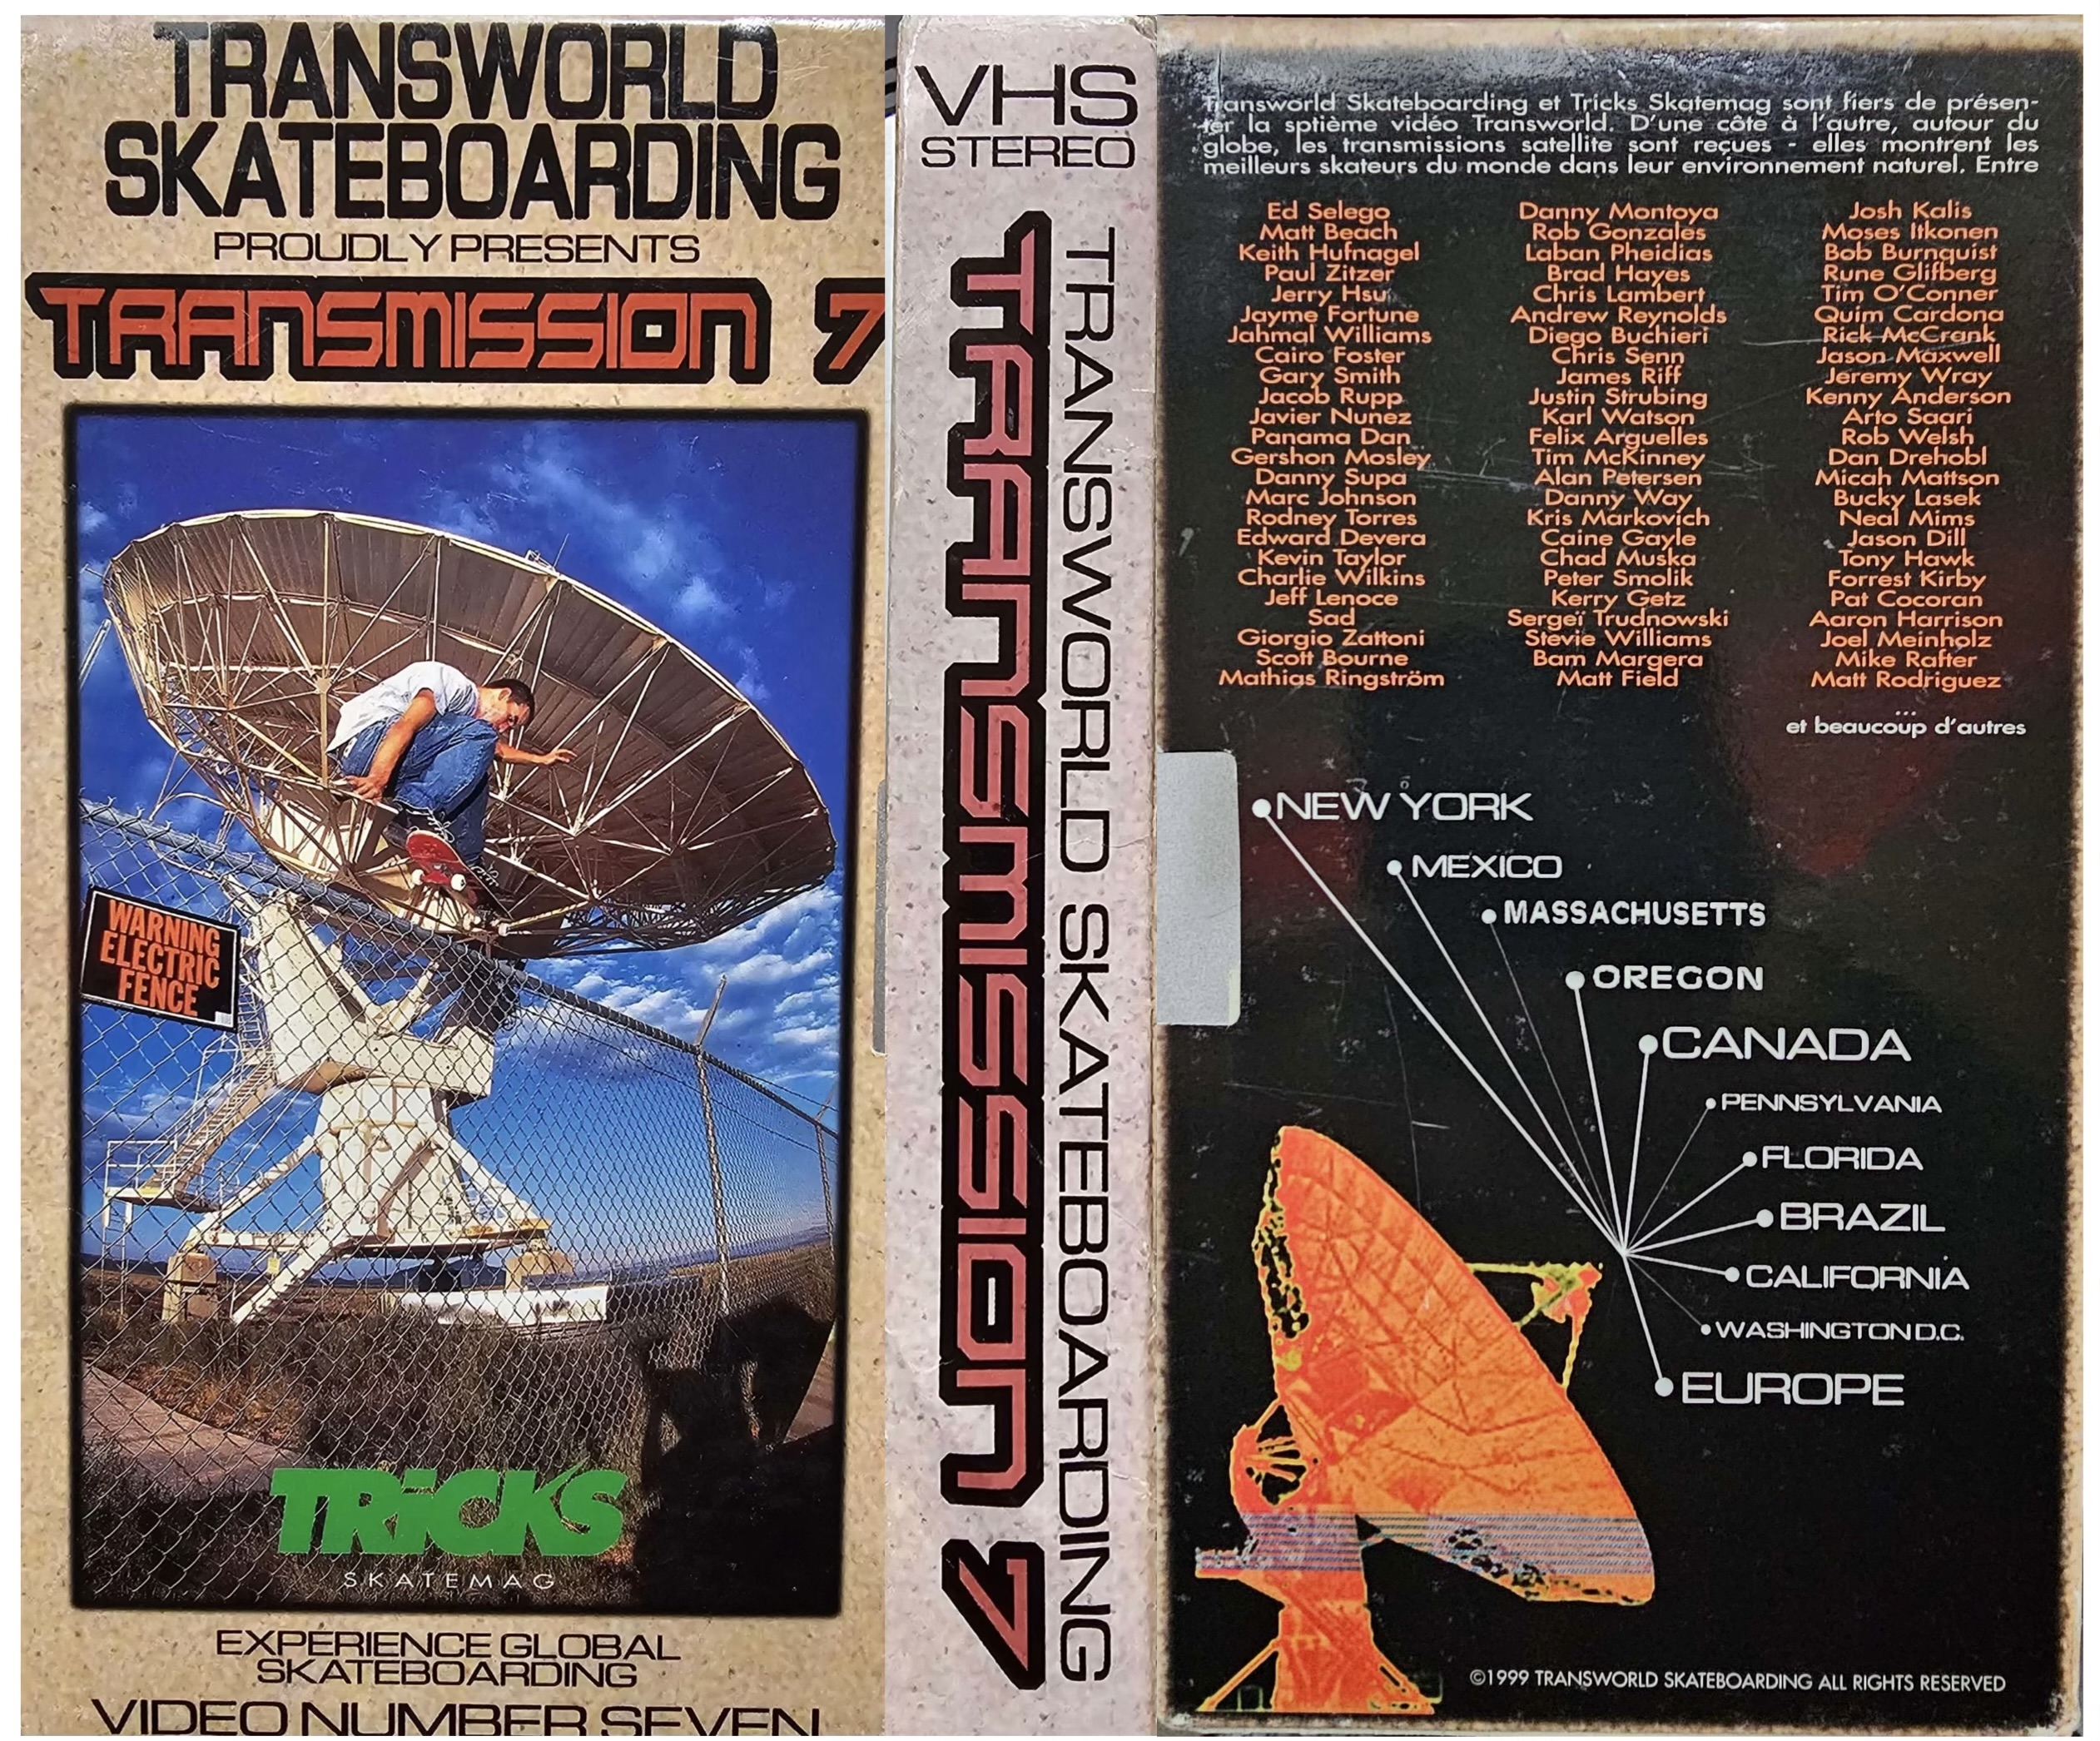 Transworld - Transmission 7 feature image